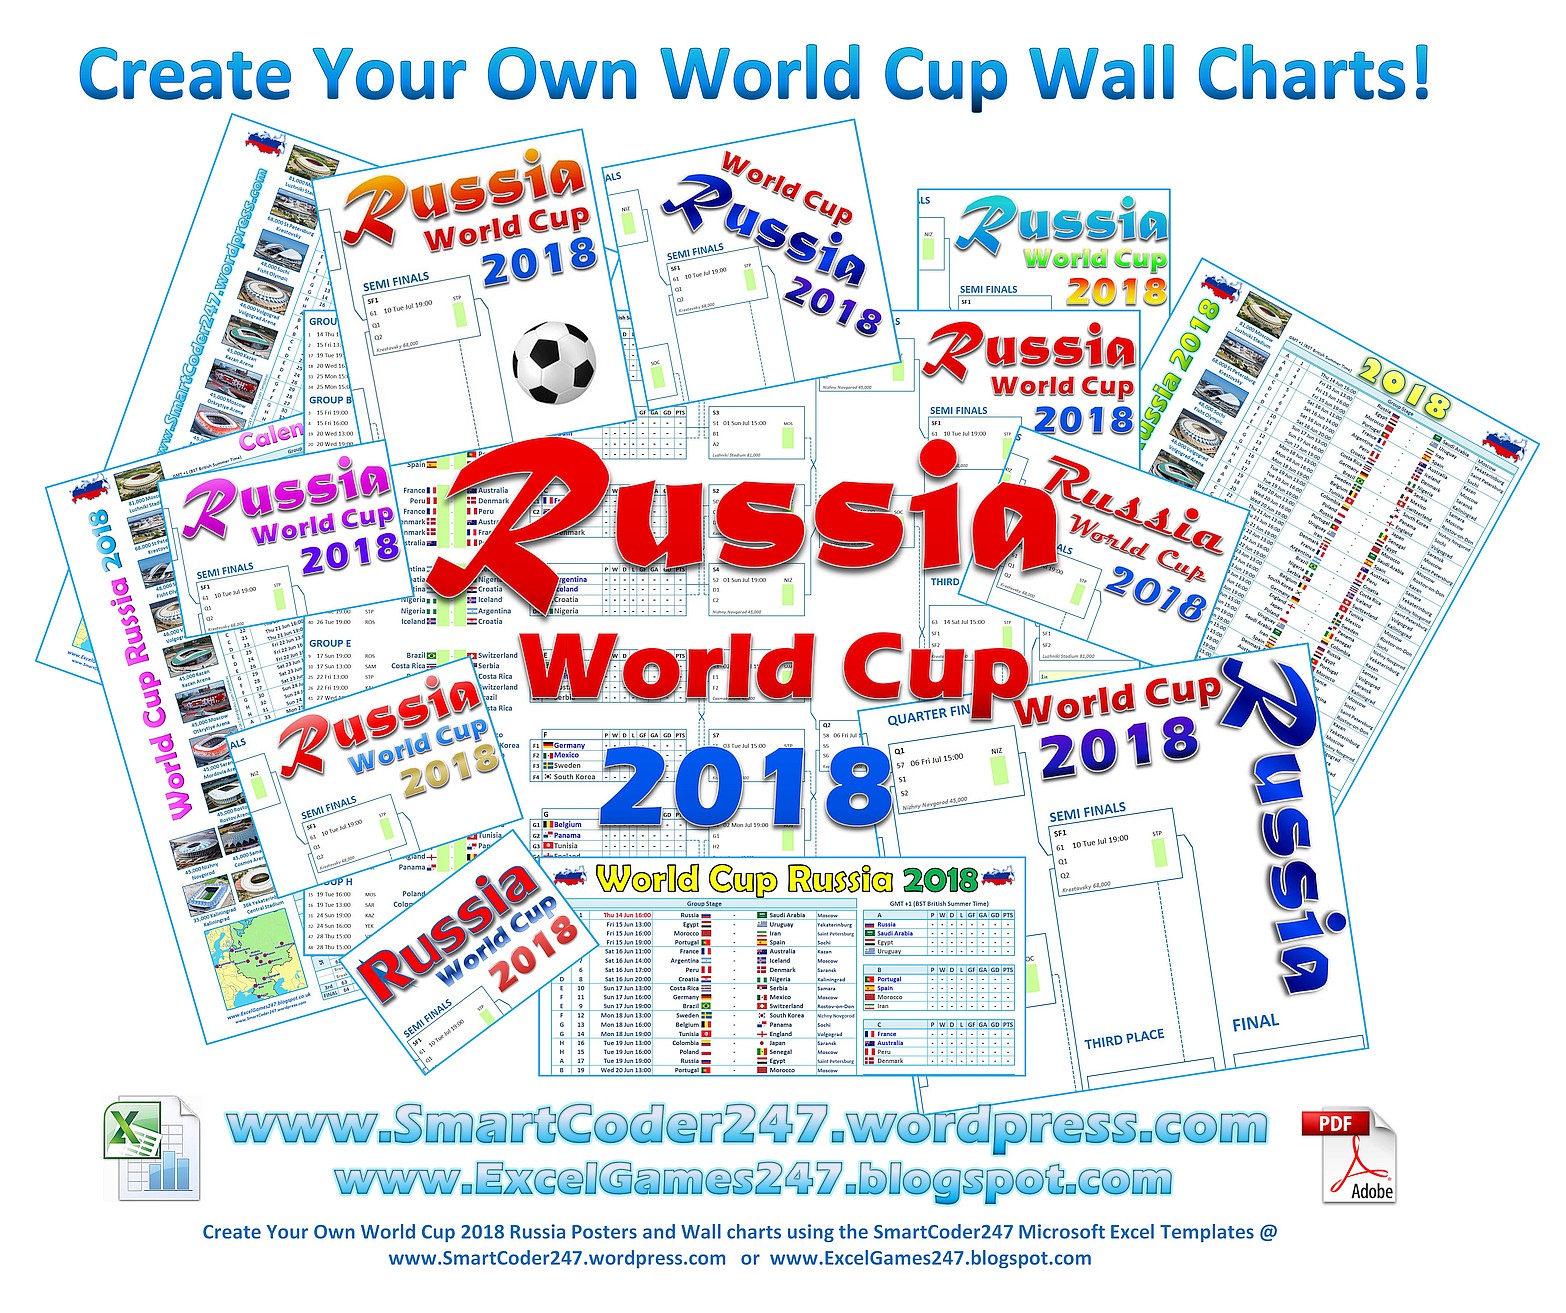 The Sun World Cup Wall Chart